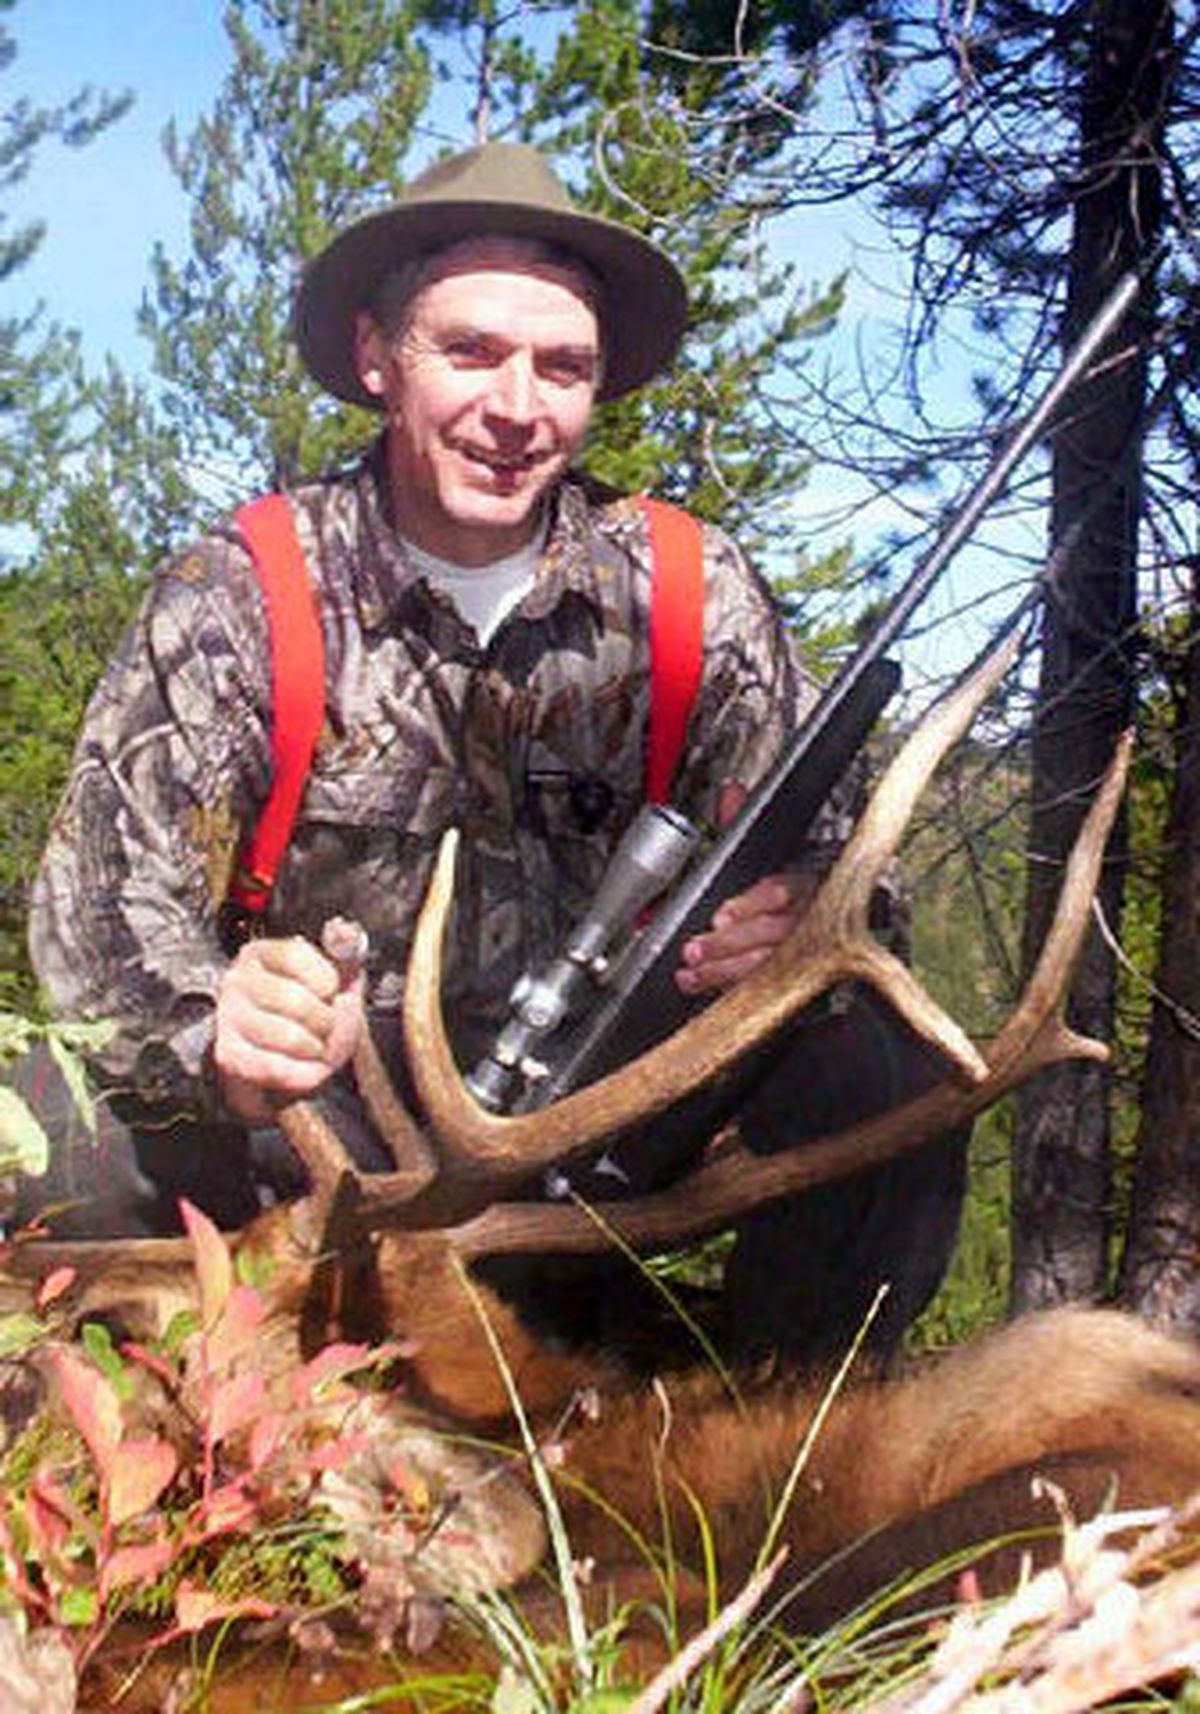 Idaho biggame hunting permit drawing results available The Spokesman